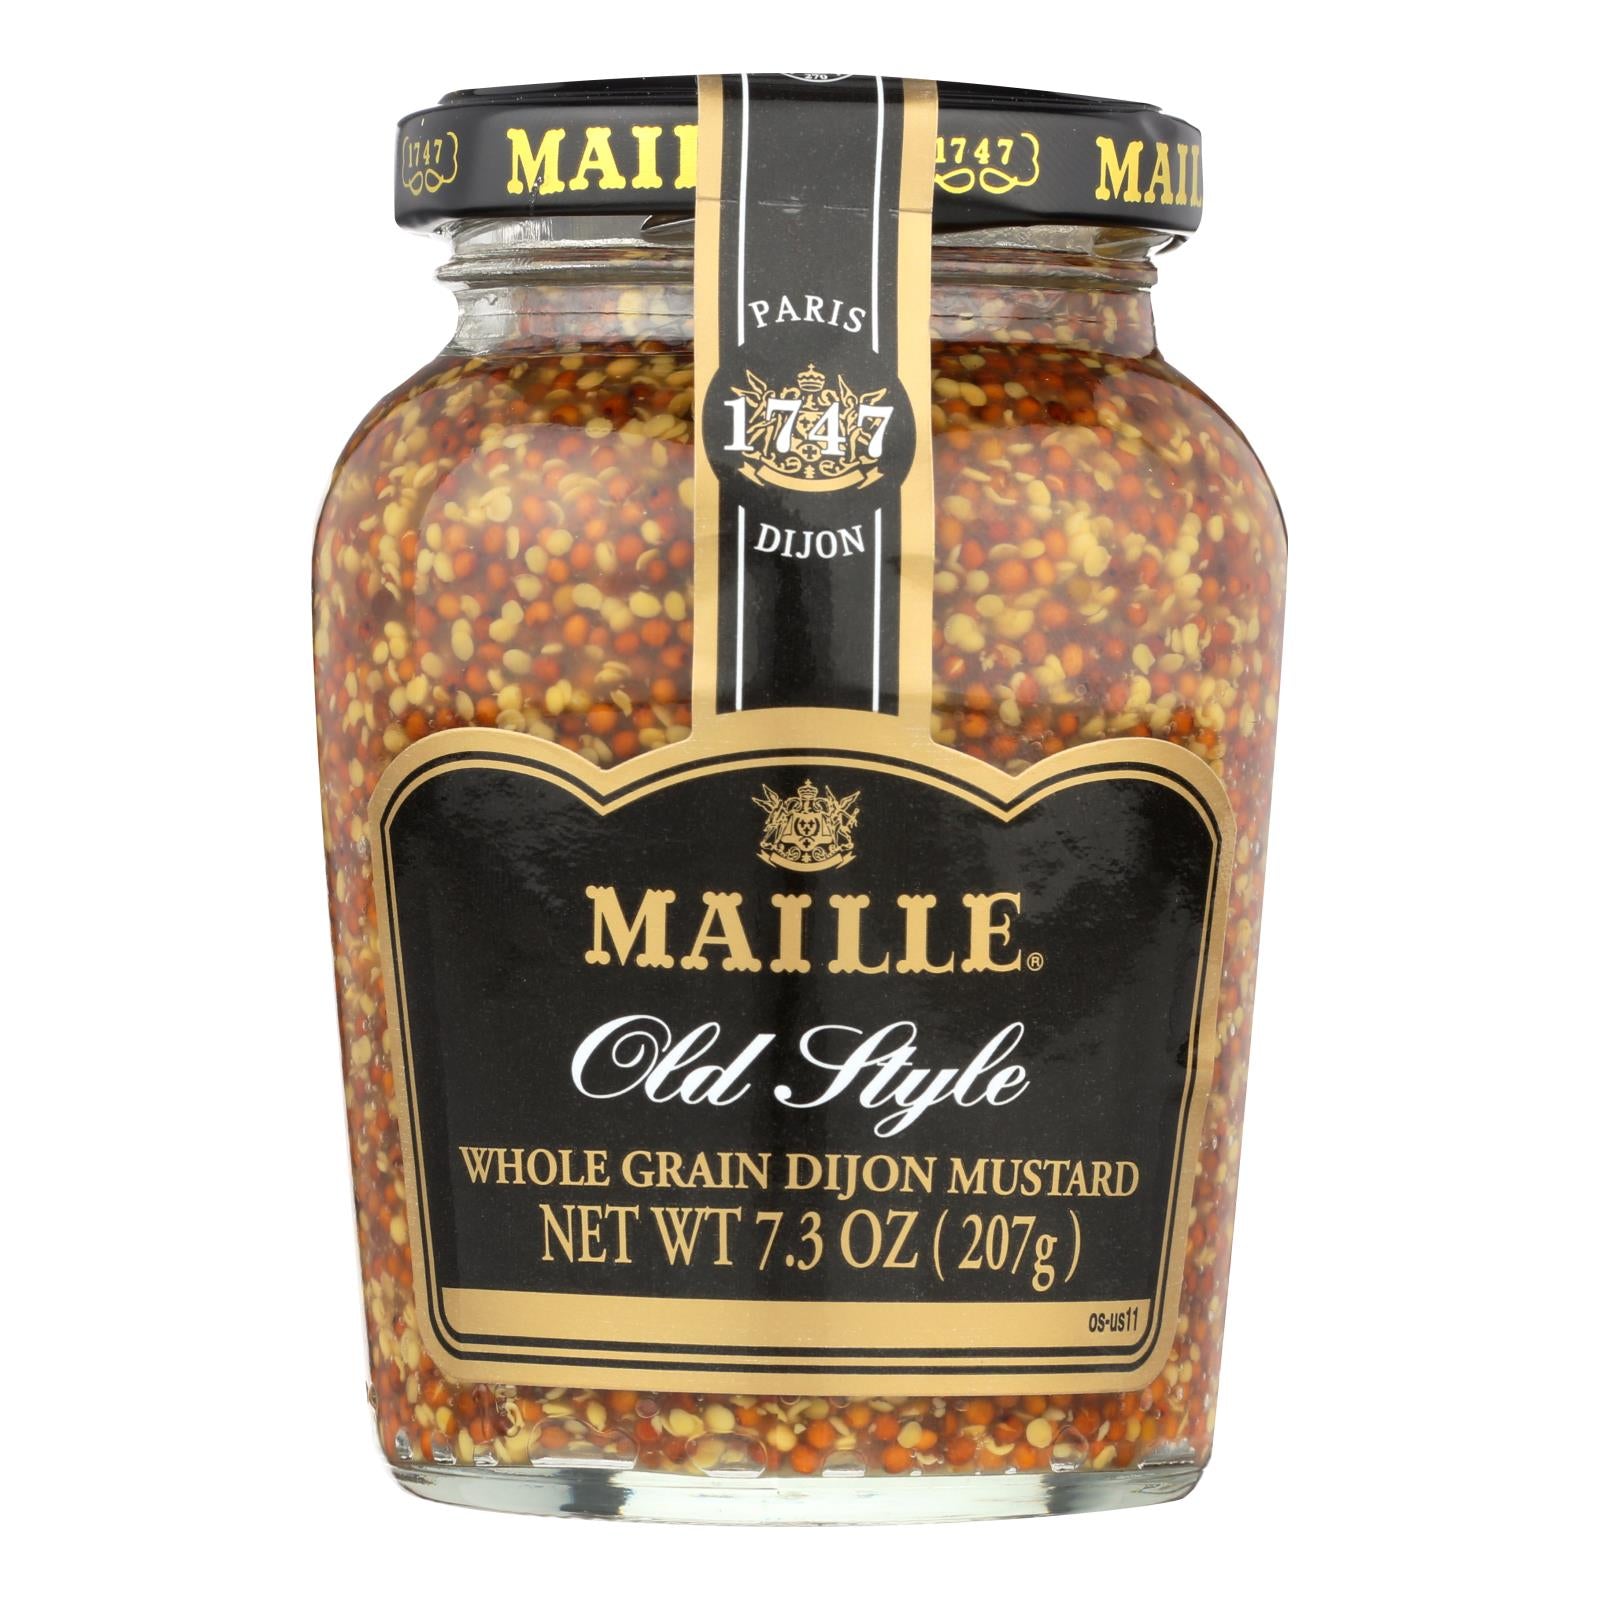 Maille Old Style Whole Grain Dijon Mustard - Case Of 6 - 7.3 Oz.